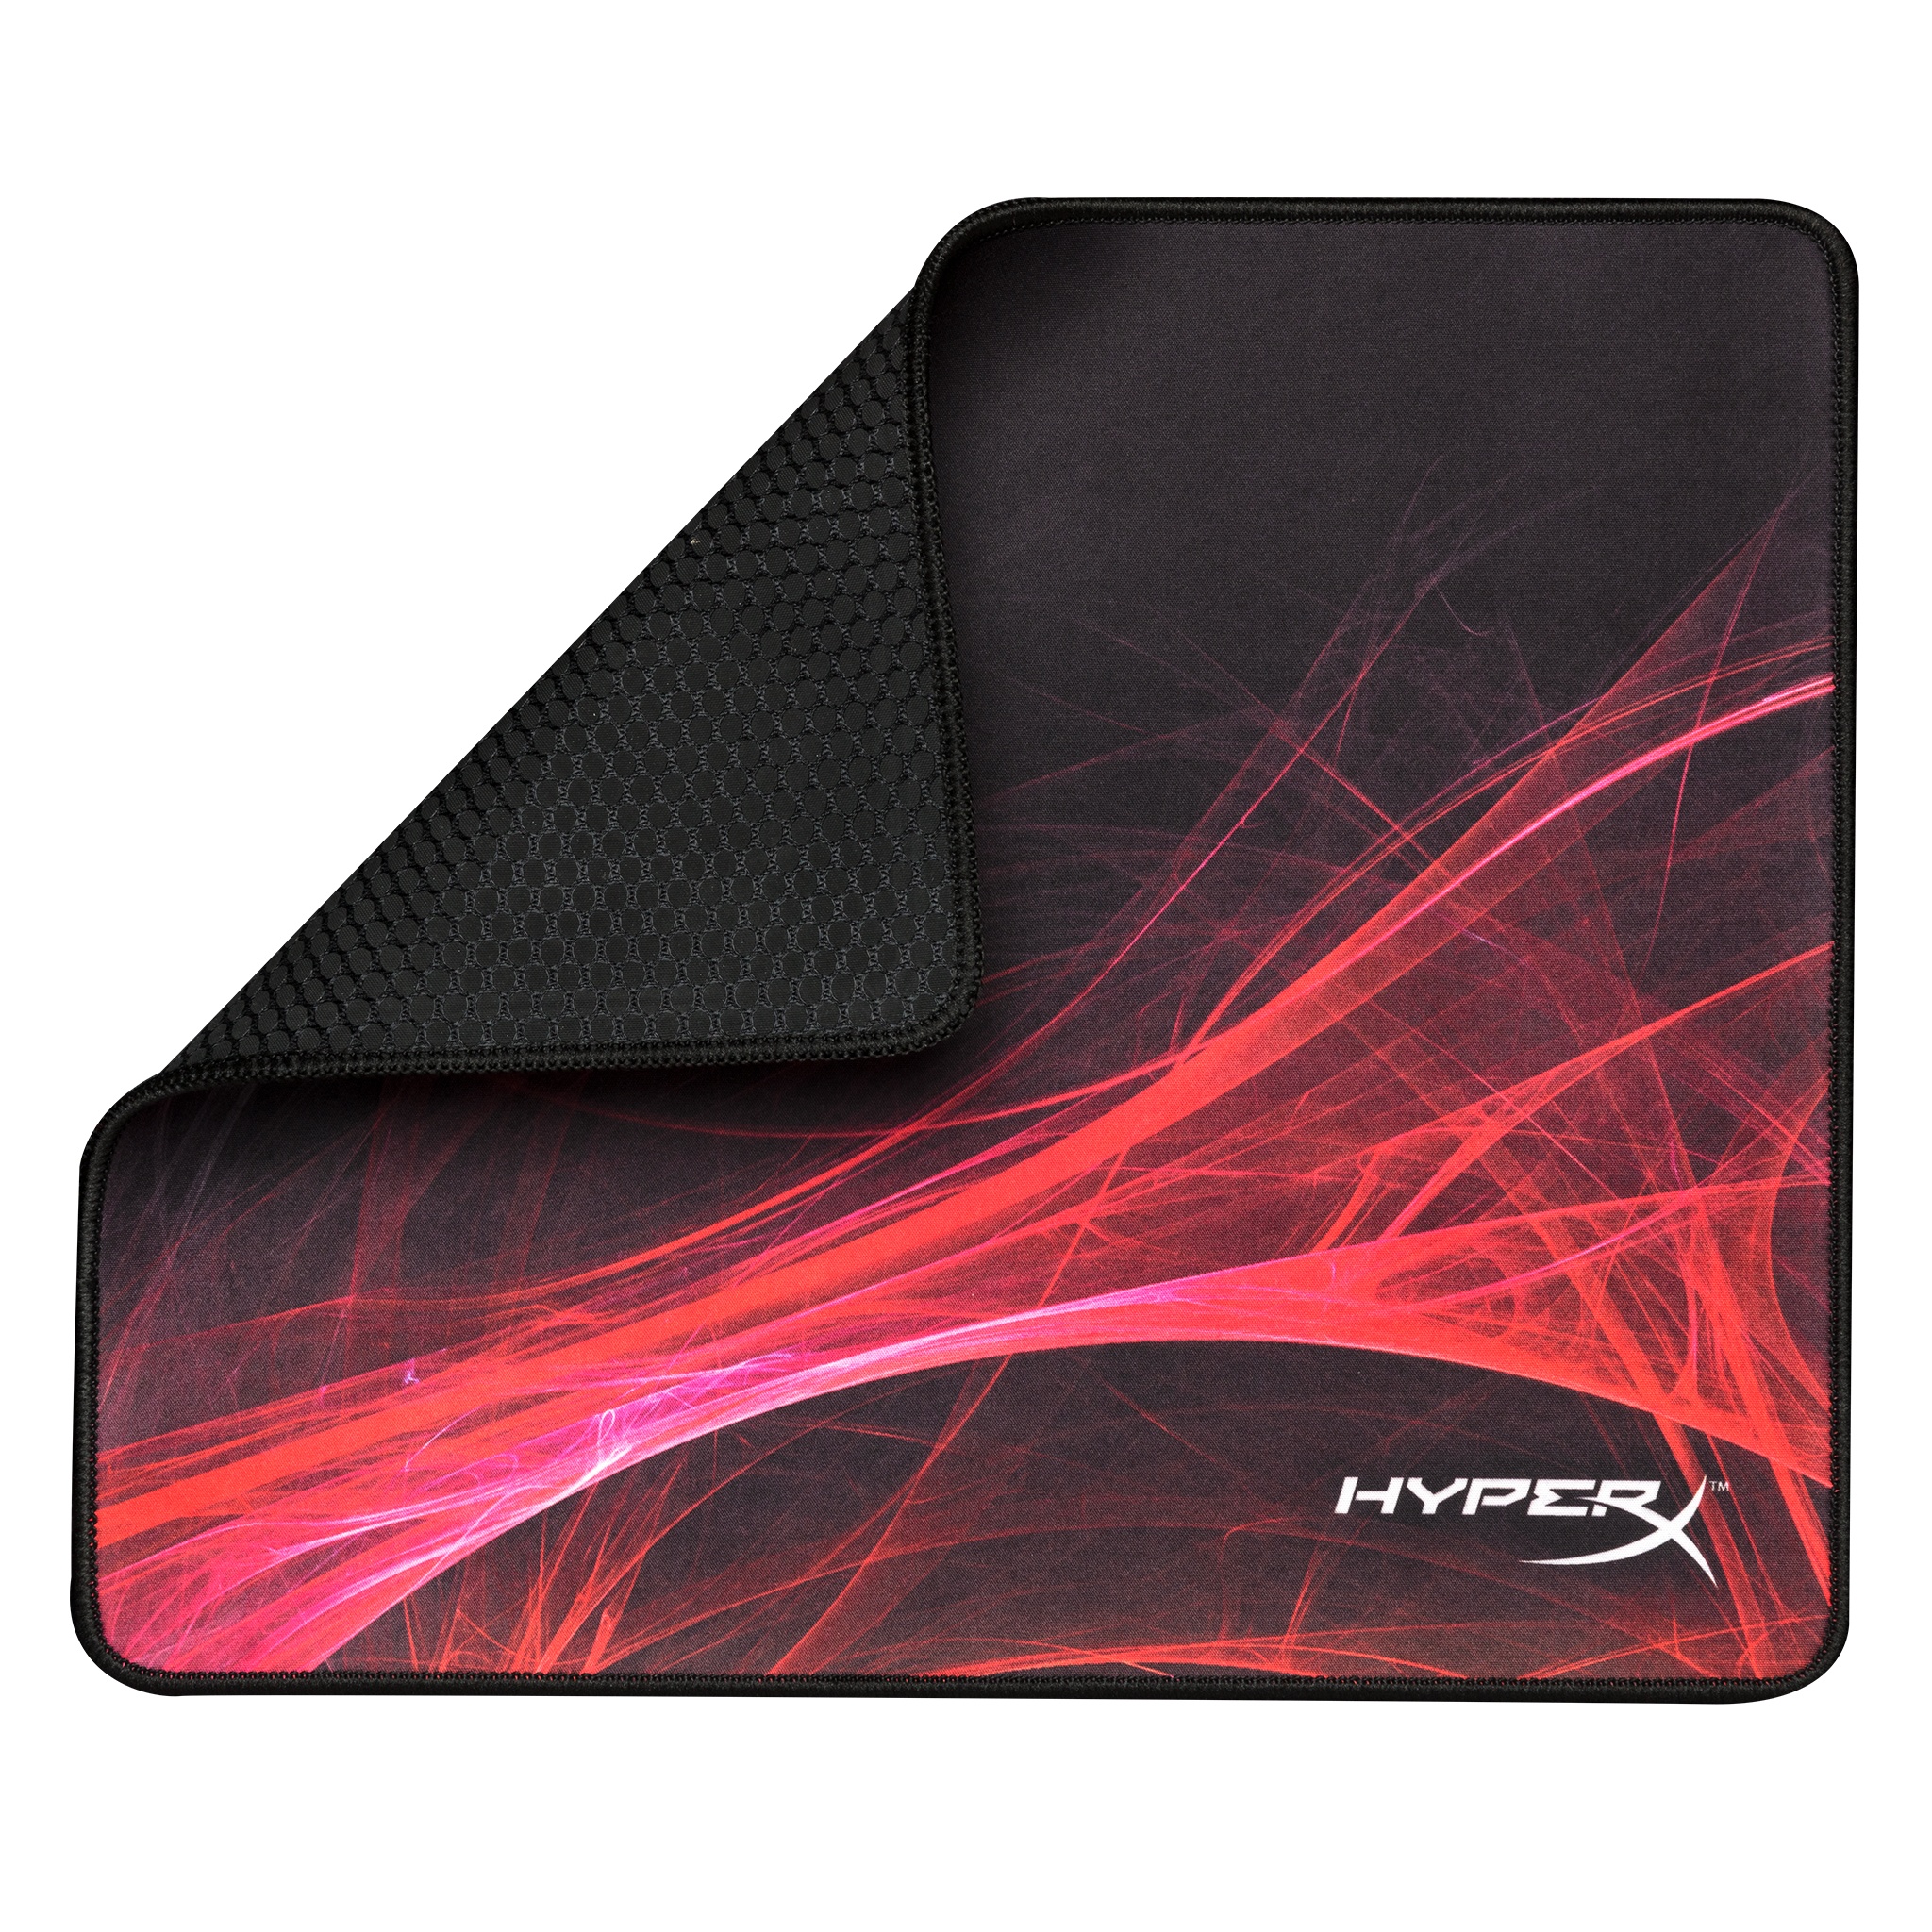 HyperX FURY S Speed Edition Gaming Mouse Pad (Medium) ของแท้ แผ่นรองเมาส์